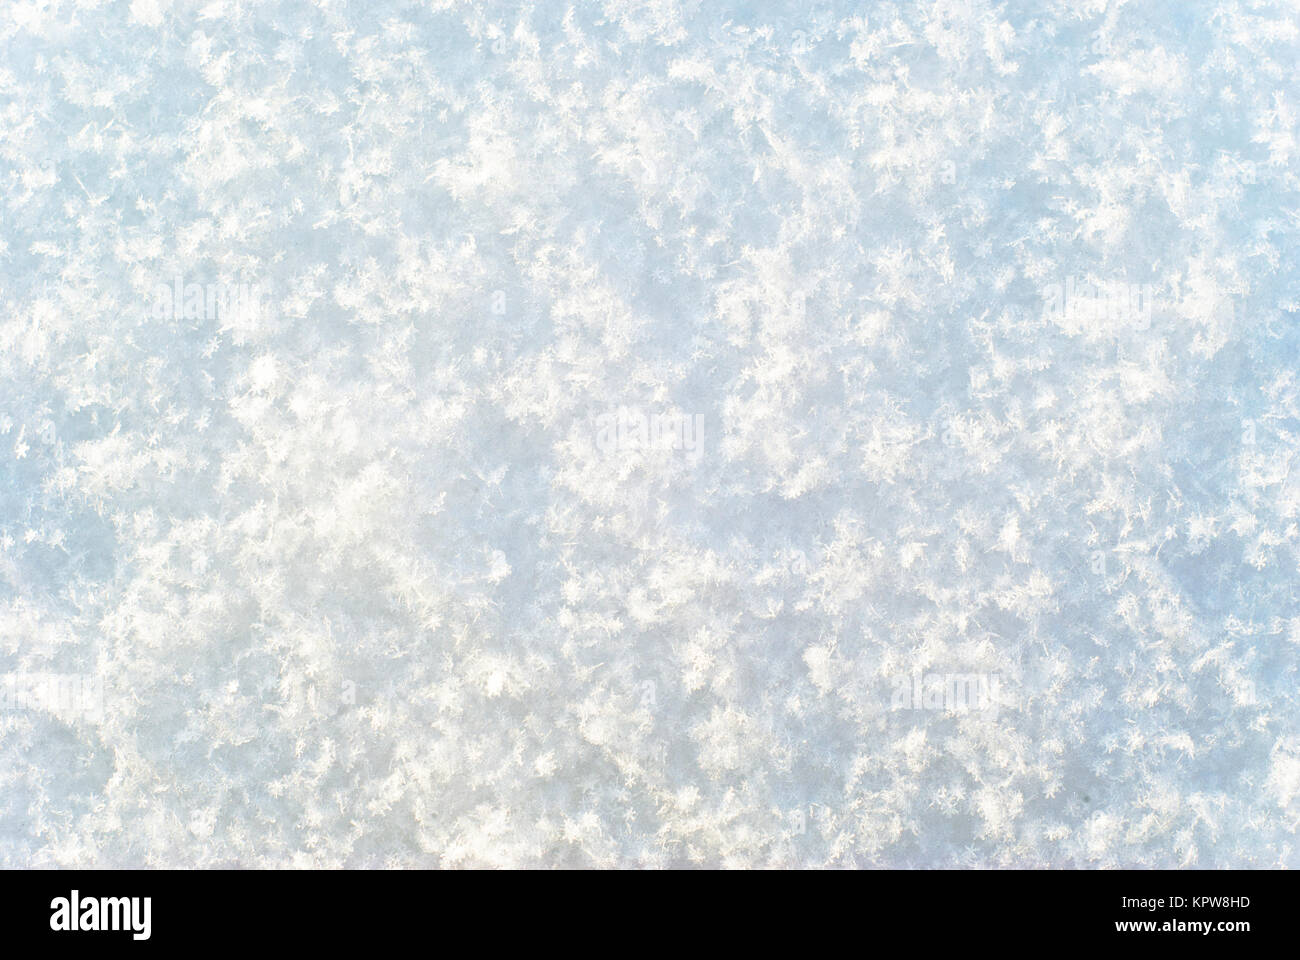 Background e texture - una superficie bianca lucida di fresco di neve caduti, costituito da singoli distinguibili i fiocchi di neve Foto Stock